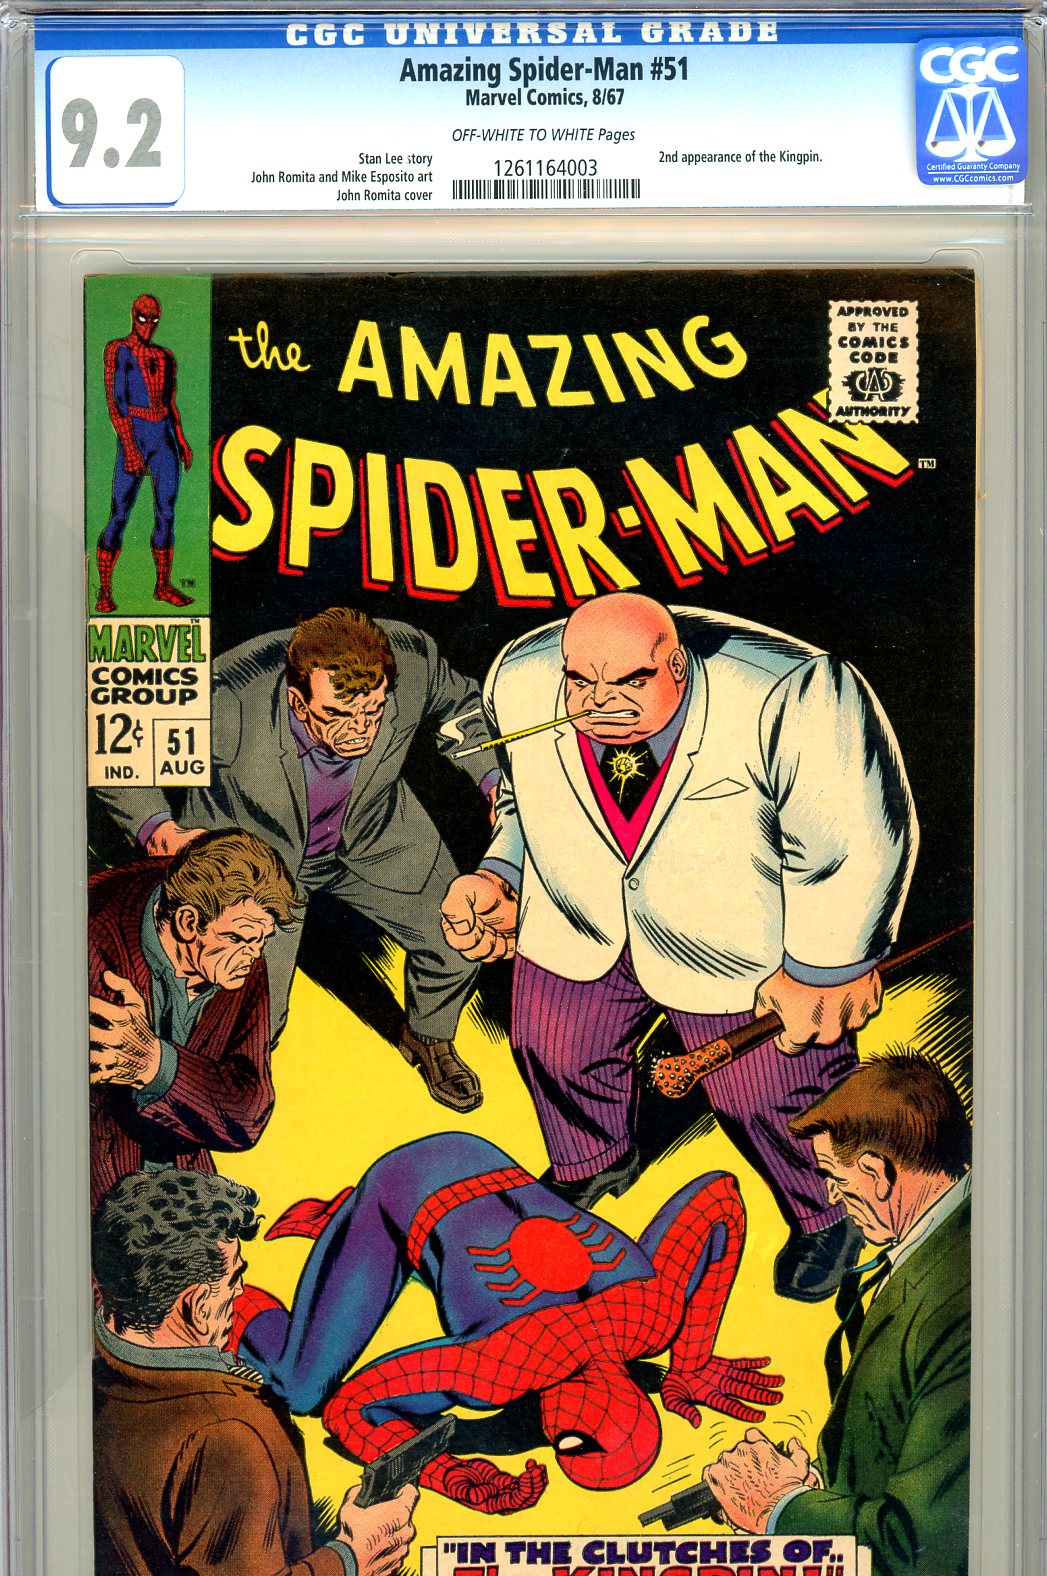 Amazing Spider-Man #51 CGC 9.2 ow/w